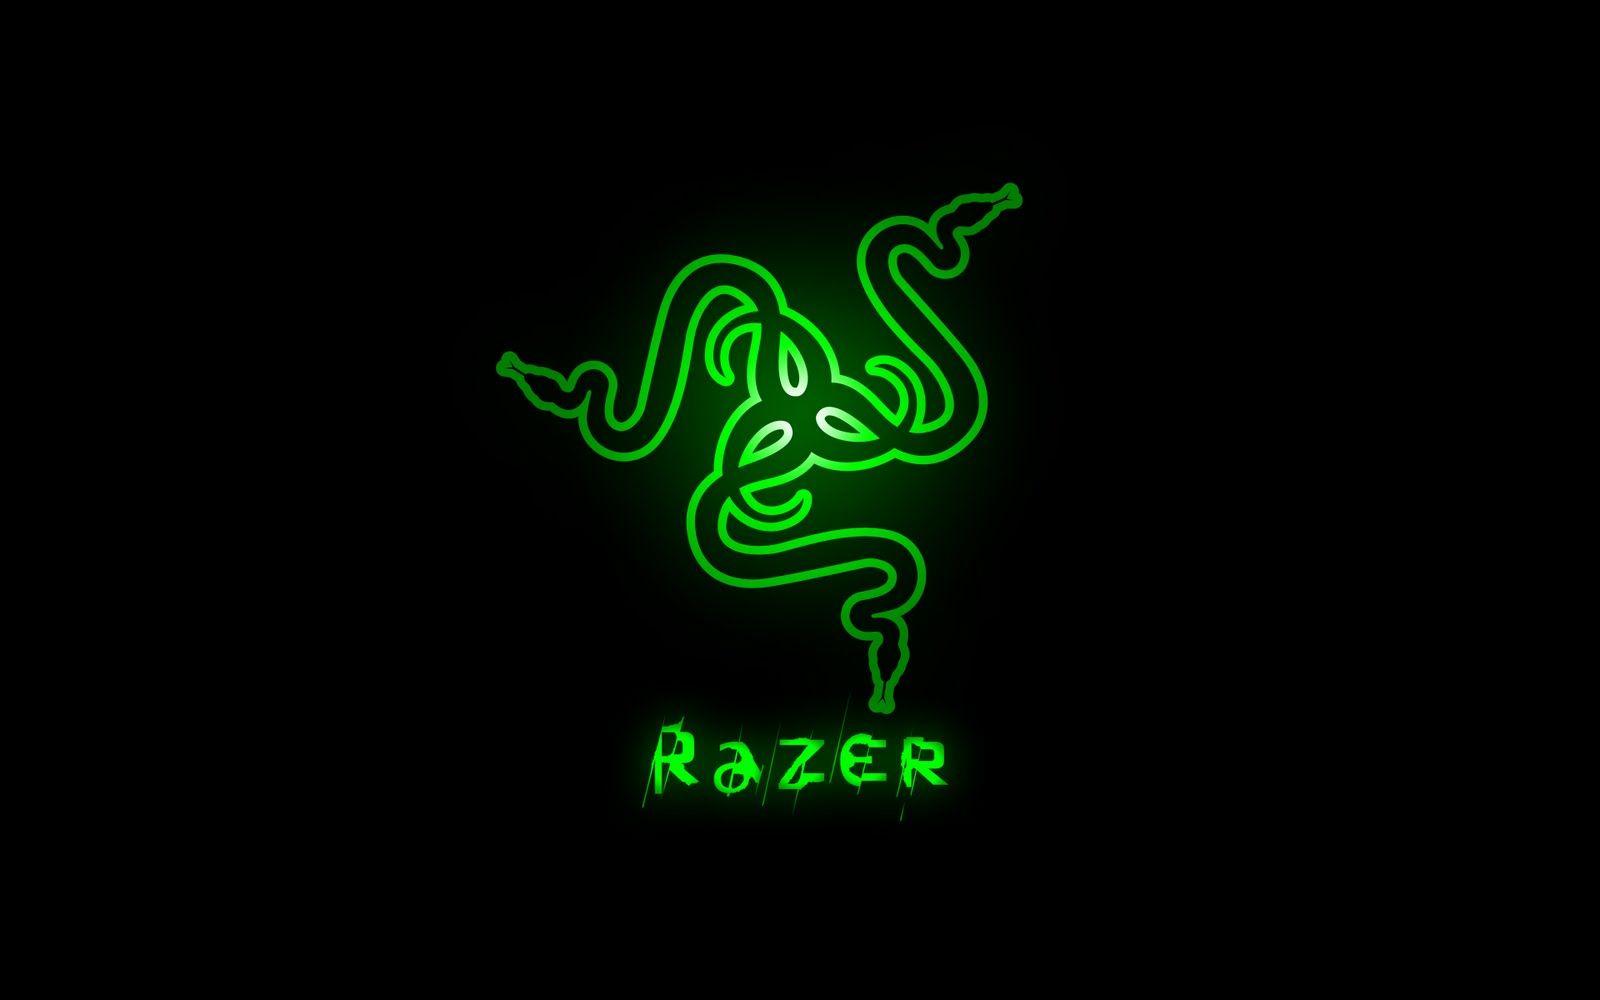 Razer Brand Logo HD 1055 HD Wallpaper. Feewall